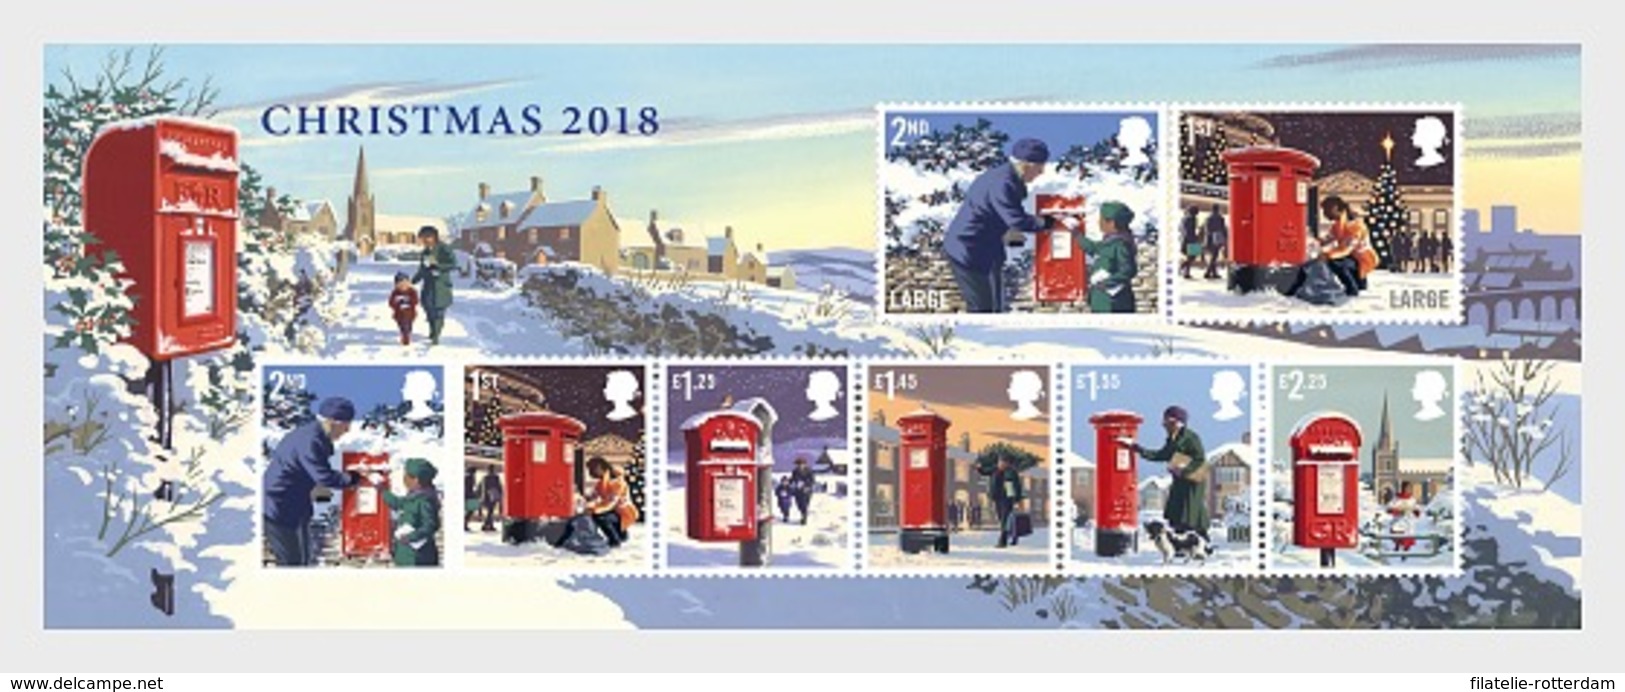 Groot-Brittannië / Great Britain - Postfris / MNH - Sheet Kerstmis 2018 - Ongebruikt